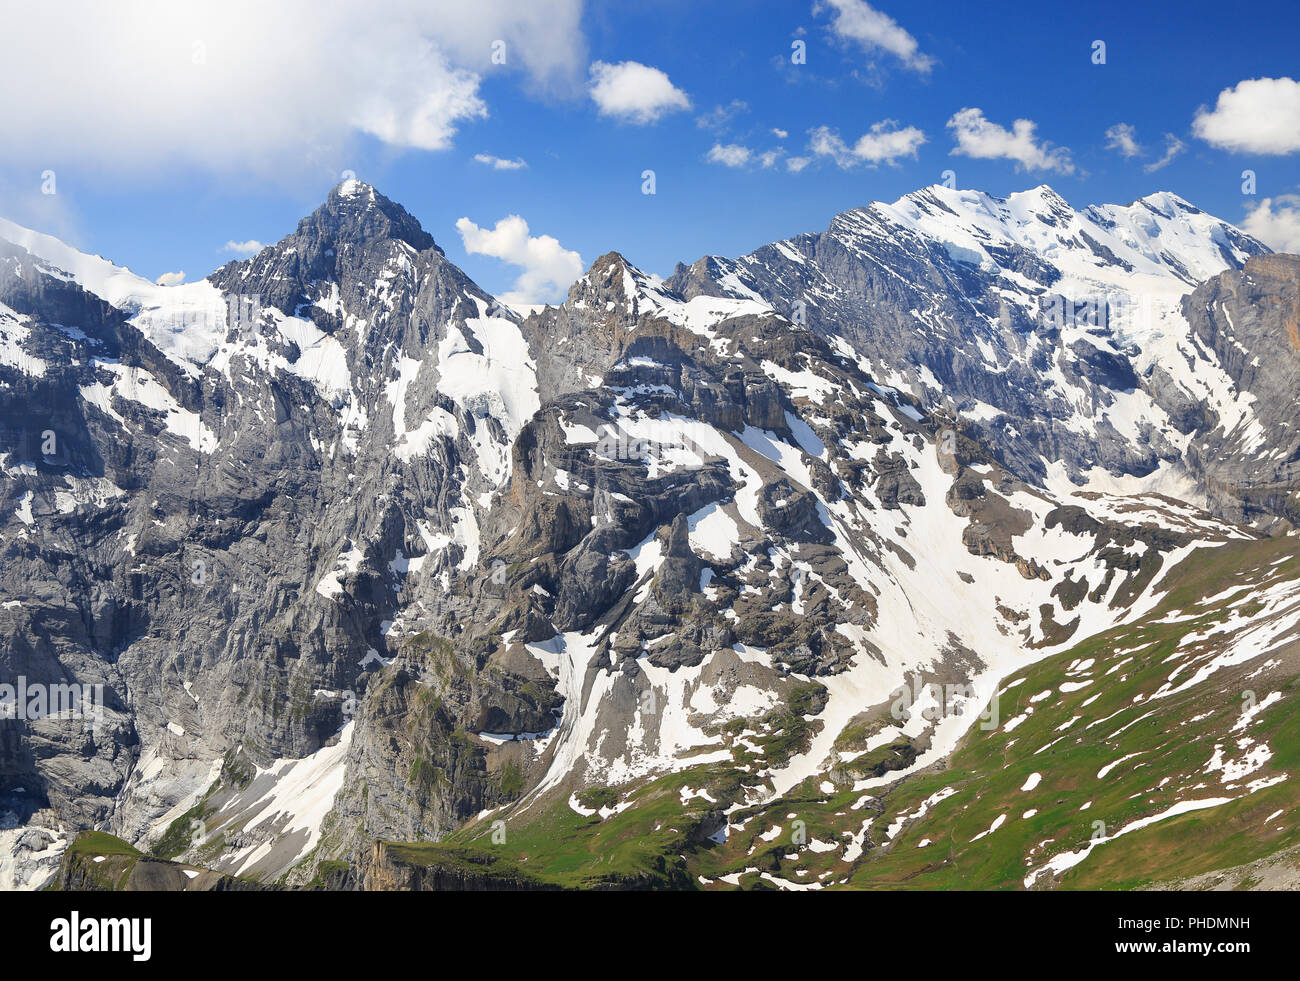 Alps Mountains, view from Gloria Pitz, Schilthorn, Switzerland Stock Photo